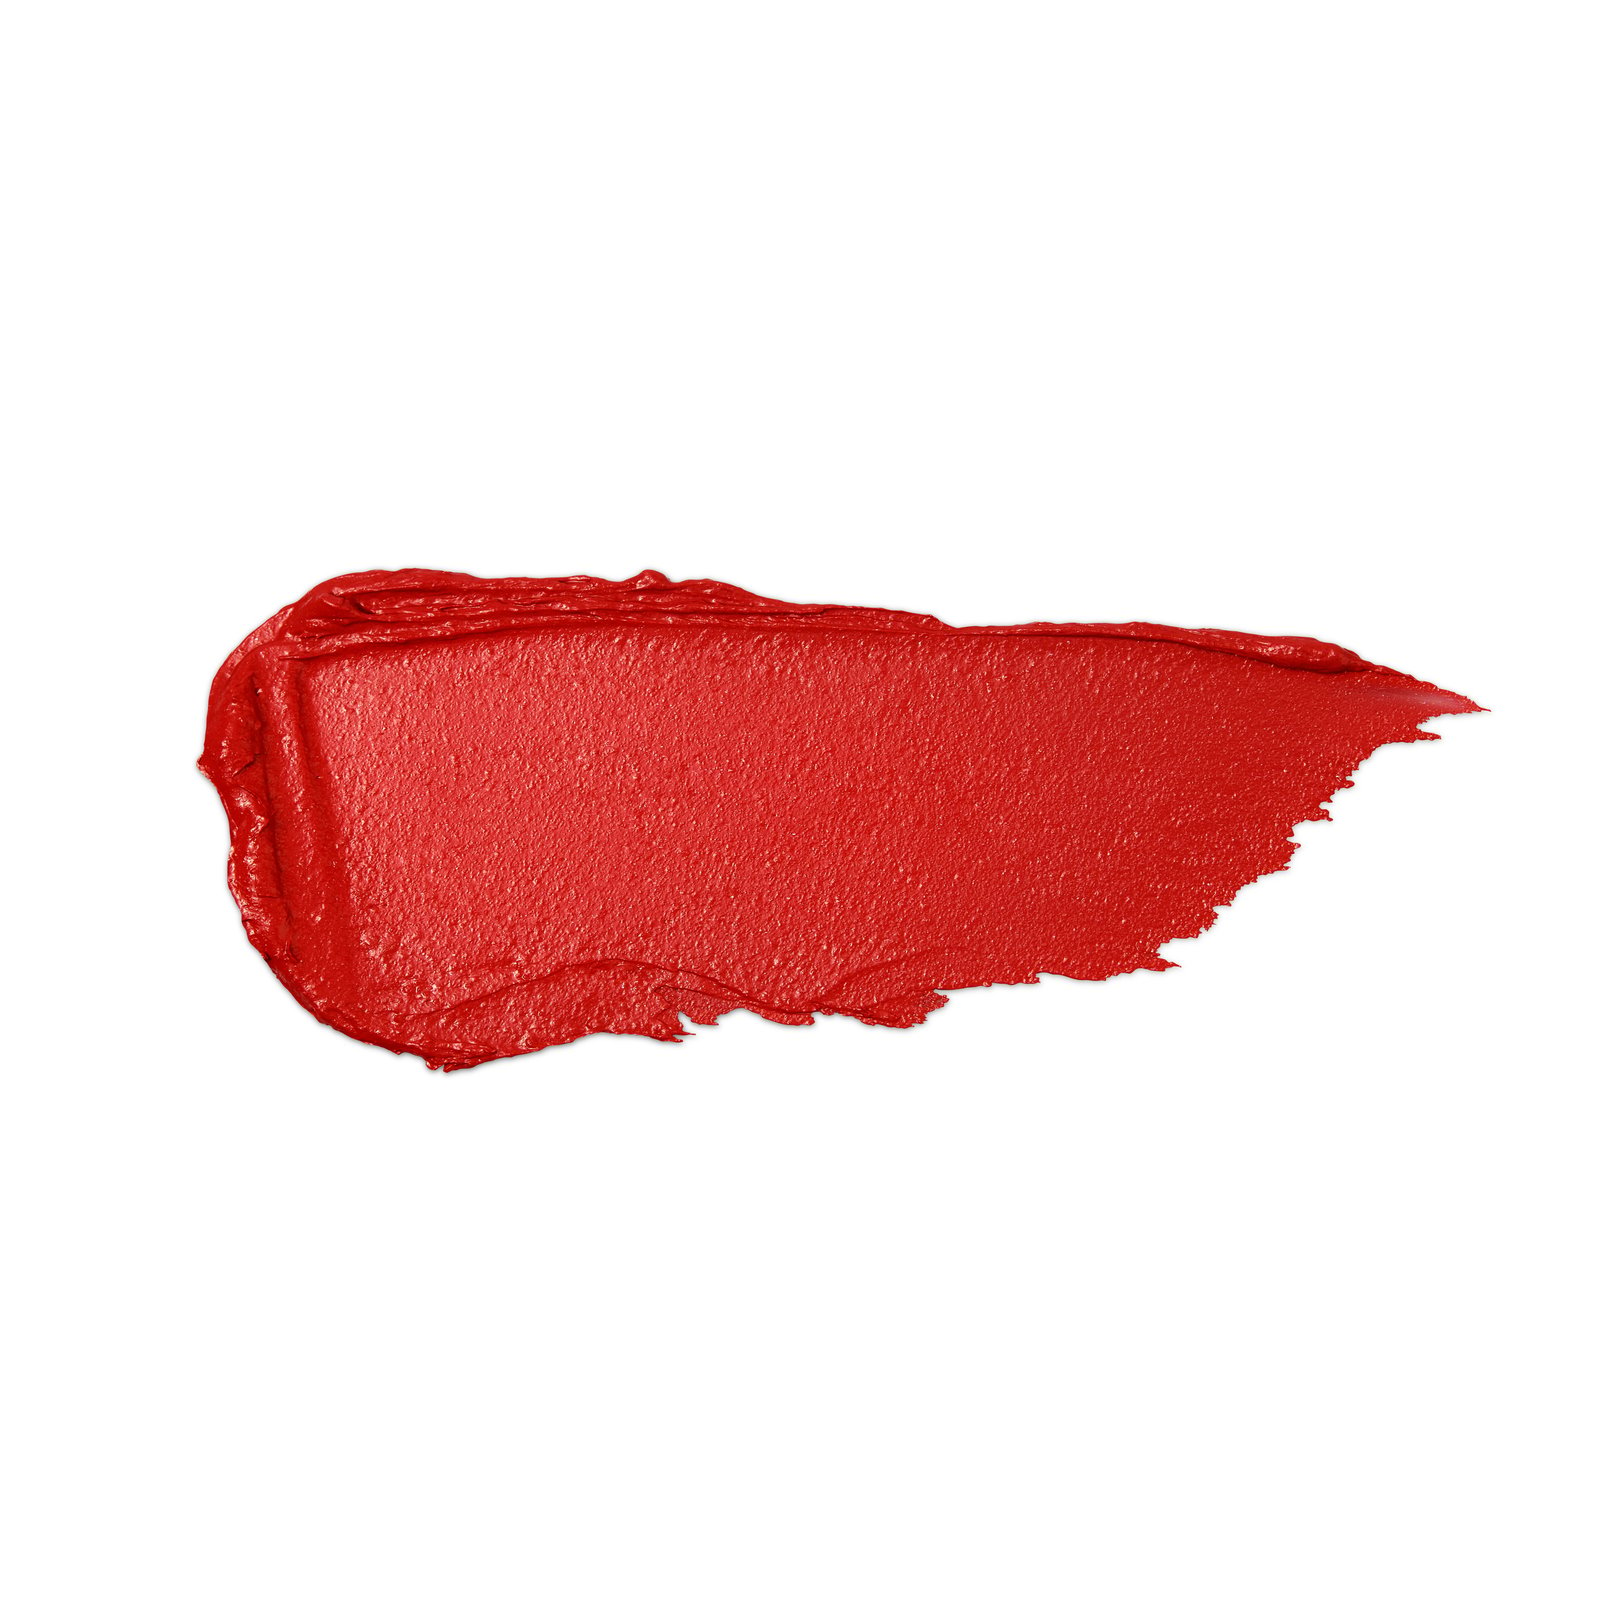 IsaDora Perfect Moisture Lipstick 215 Classic Red 4g